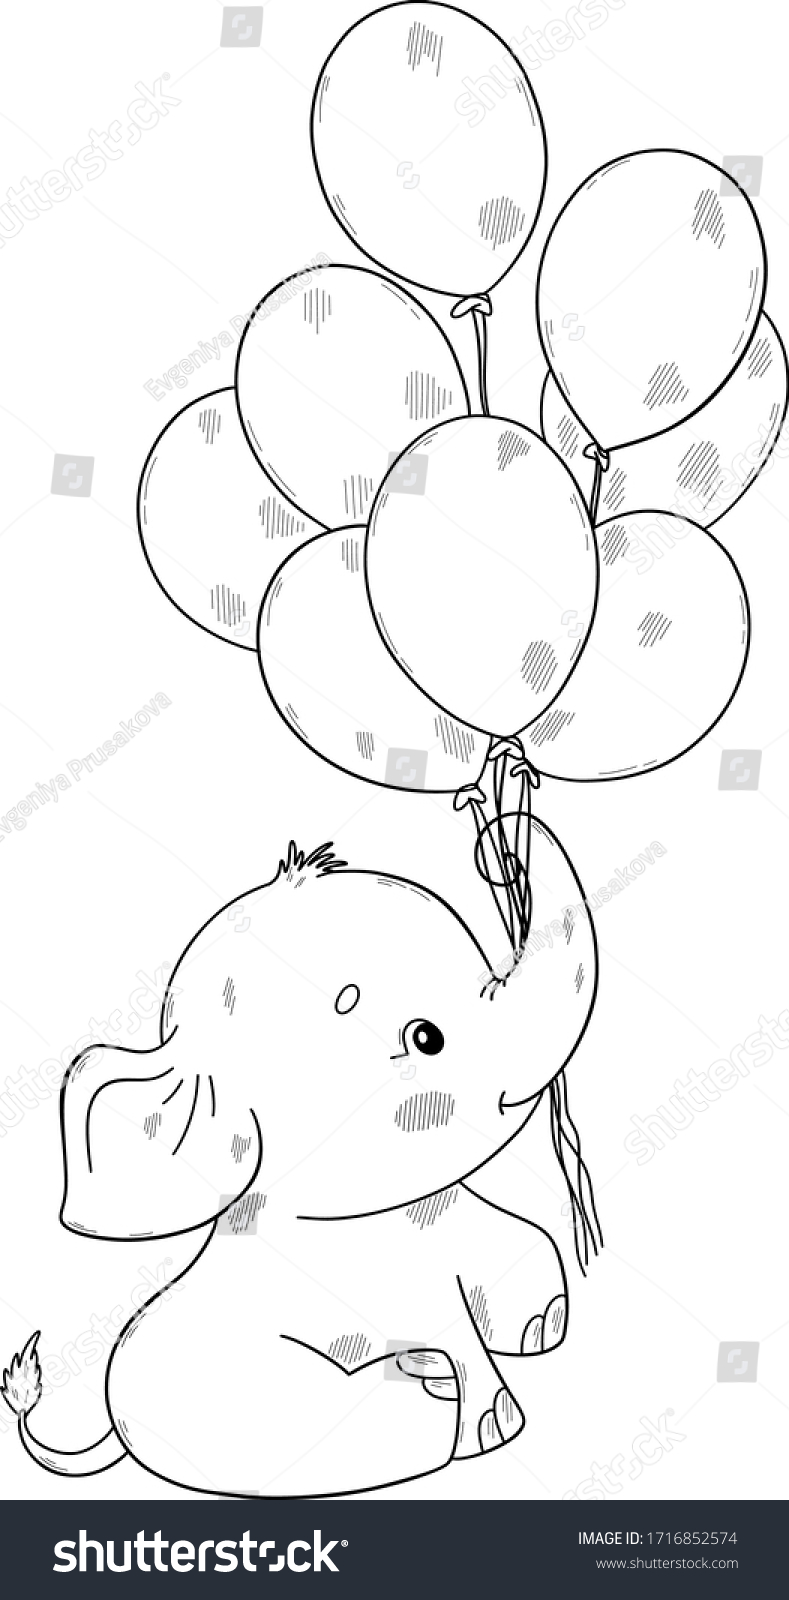 Cute Baby Elephant Coloring Book Page: Vector có sẵn (miễn phí bản